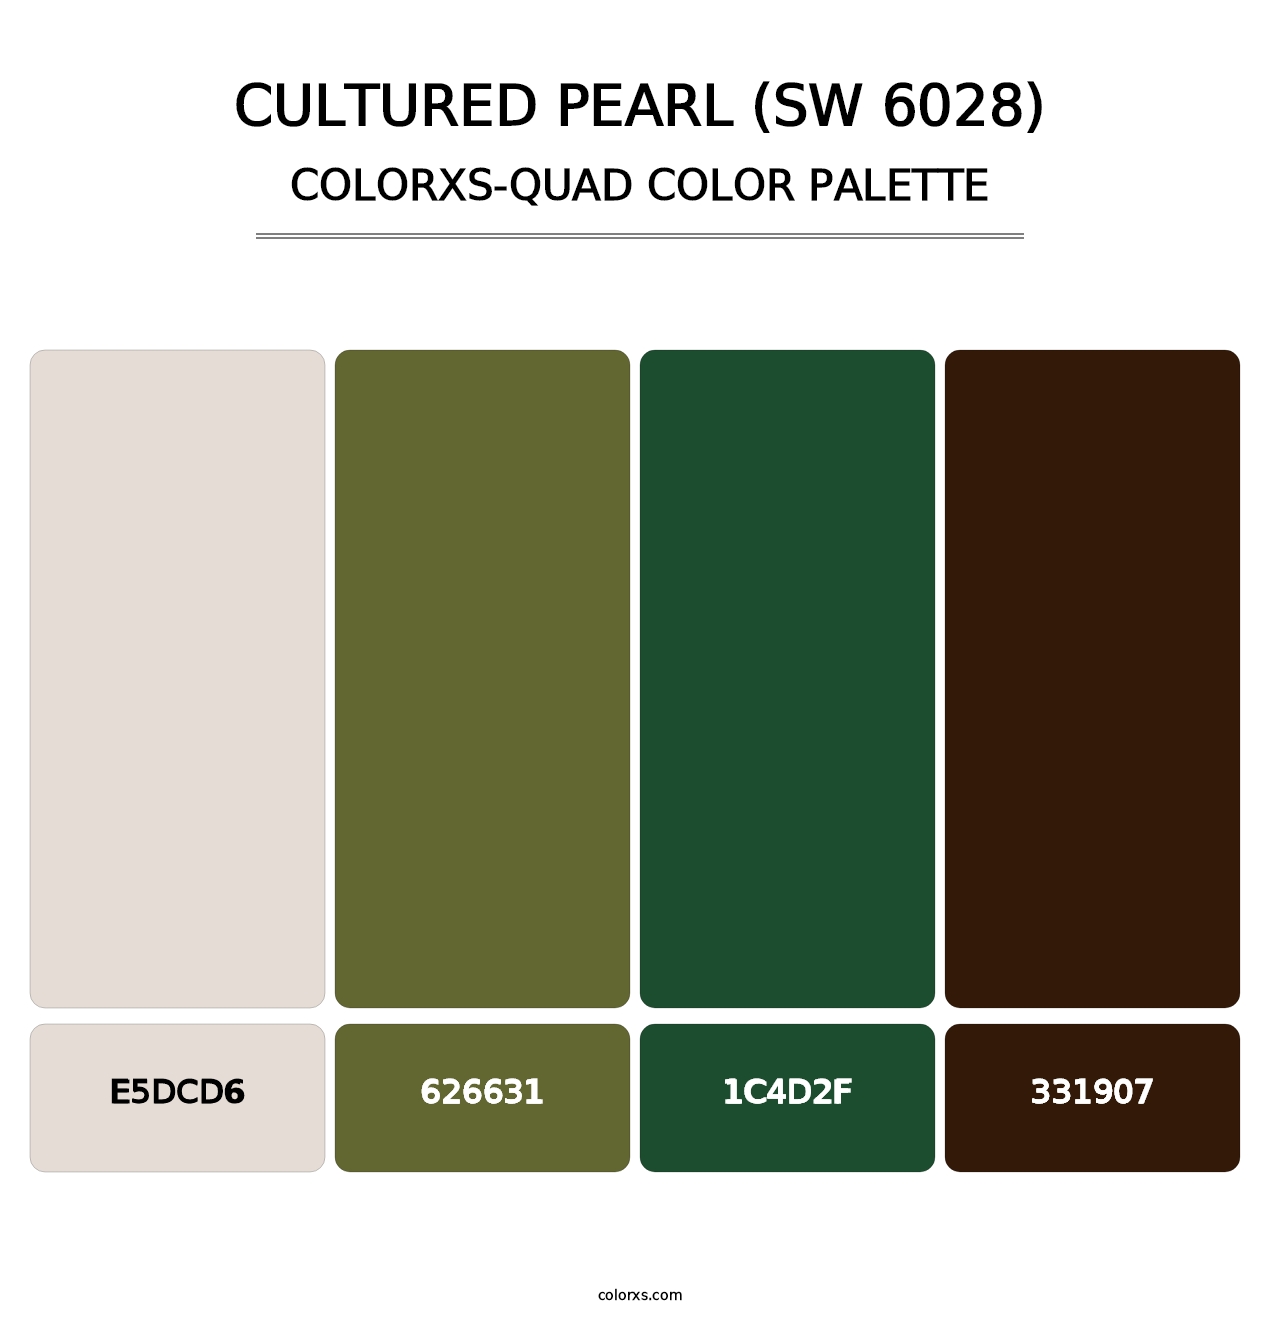 Cultured Pearl (SW 6028) - Colorxs Quad Palette